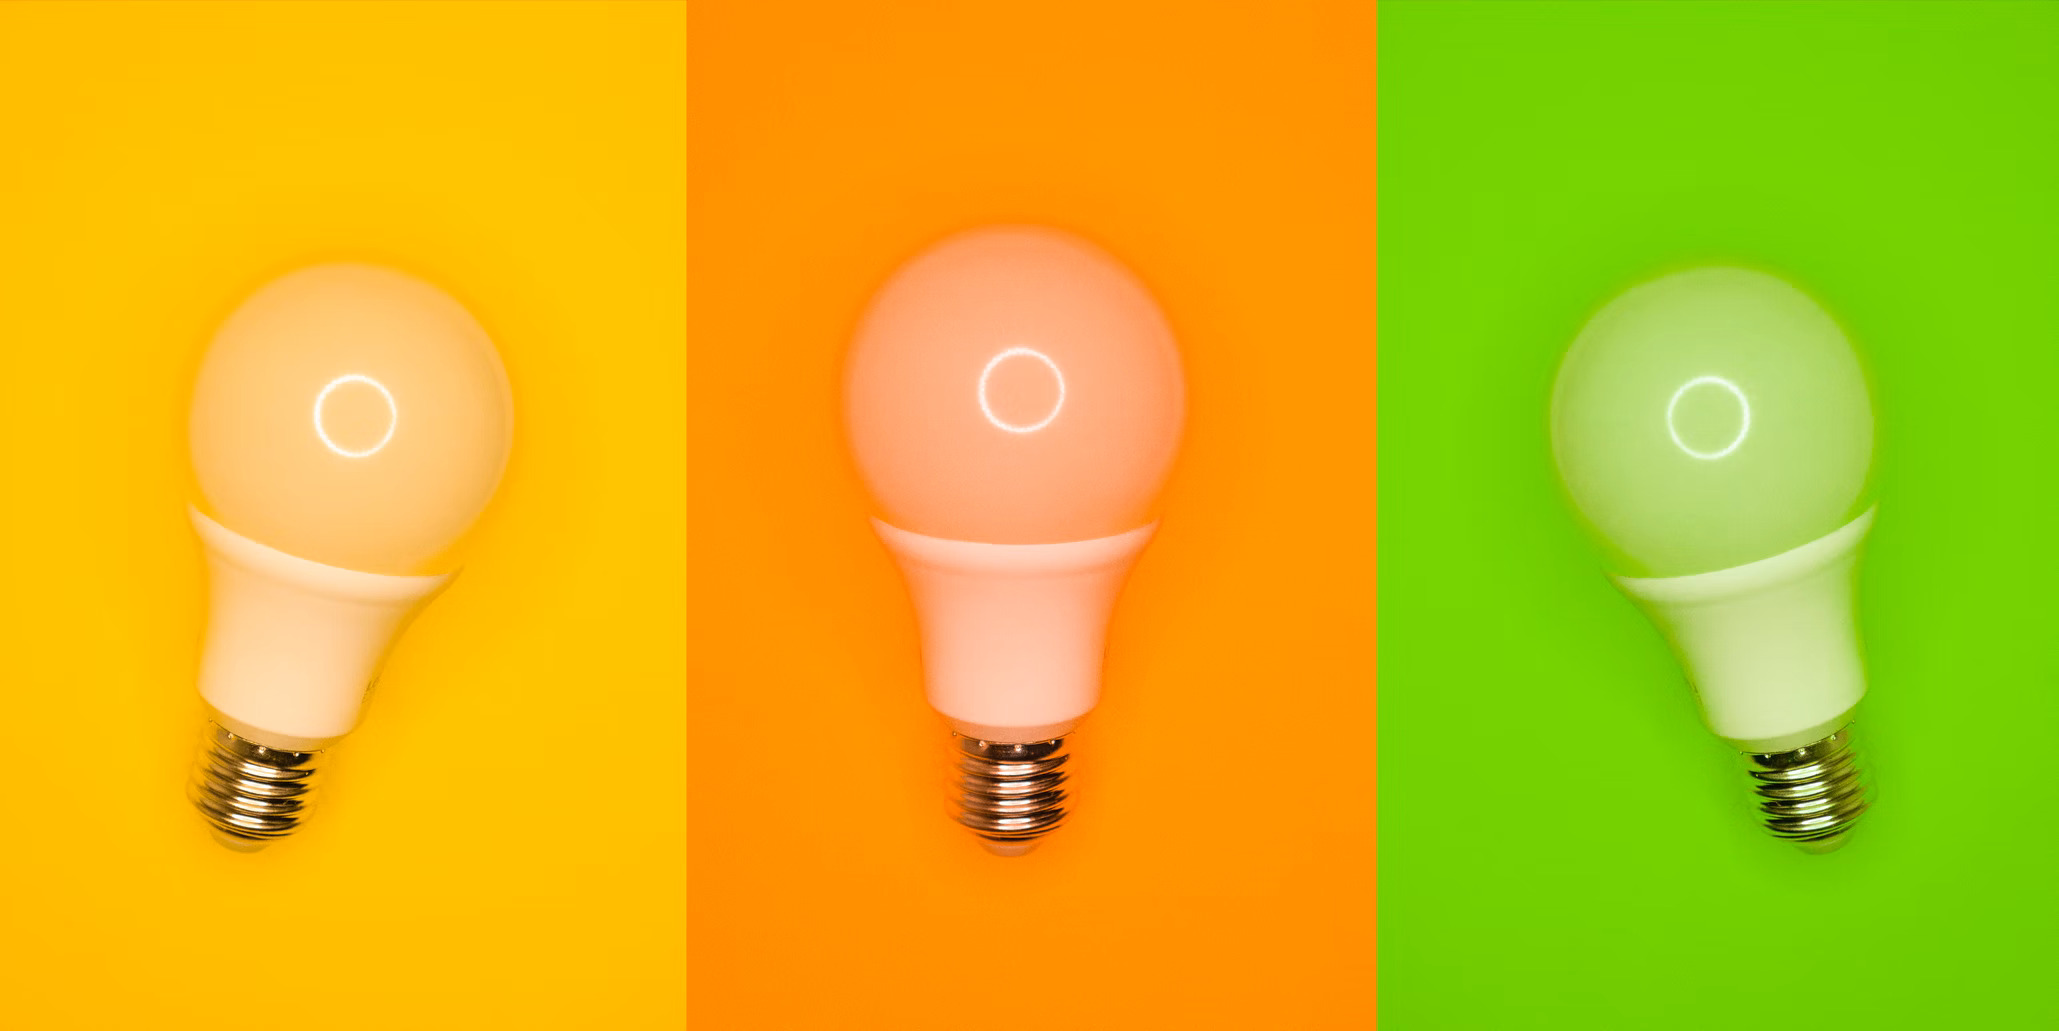 Photo of 3 lightbulbs representing professional creativity - Tulane School of Professional Advancement